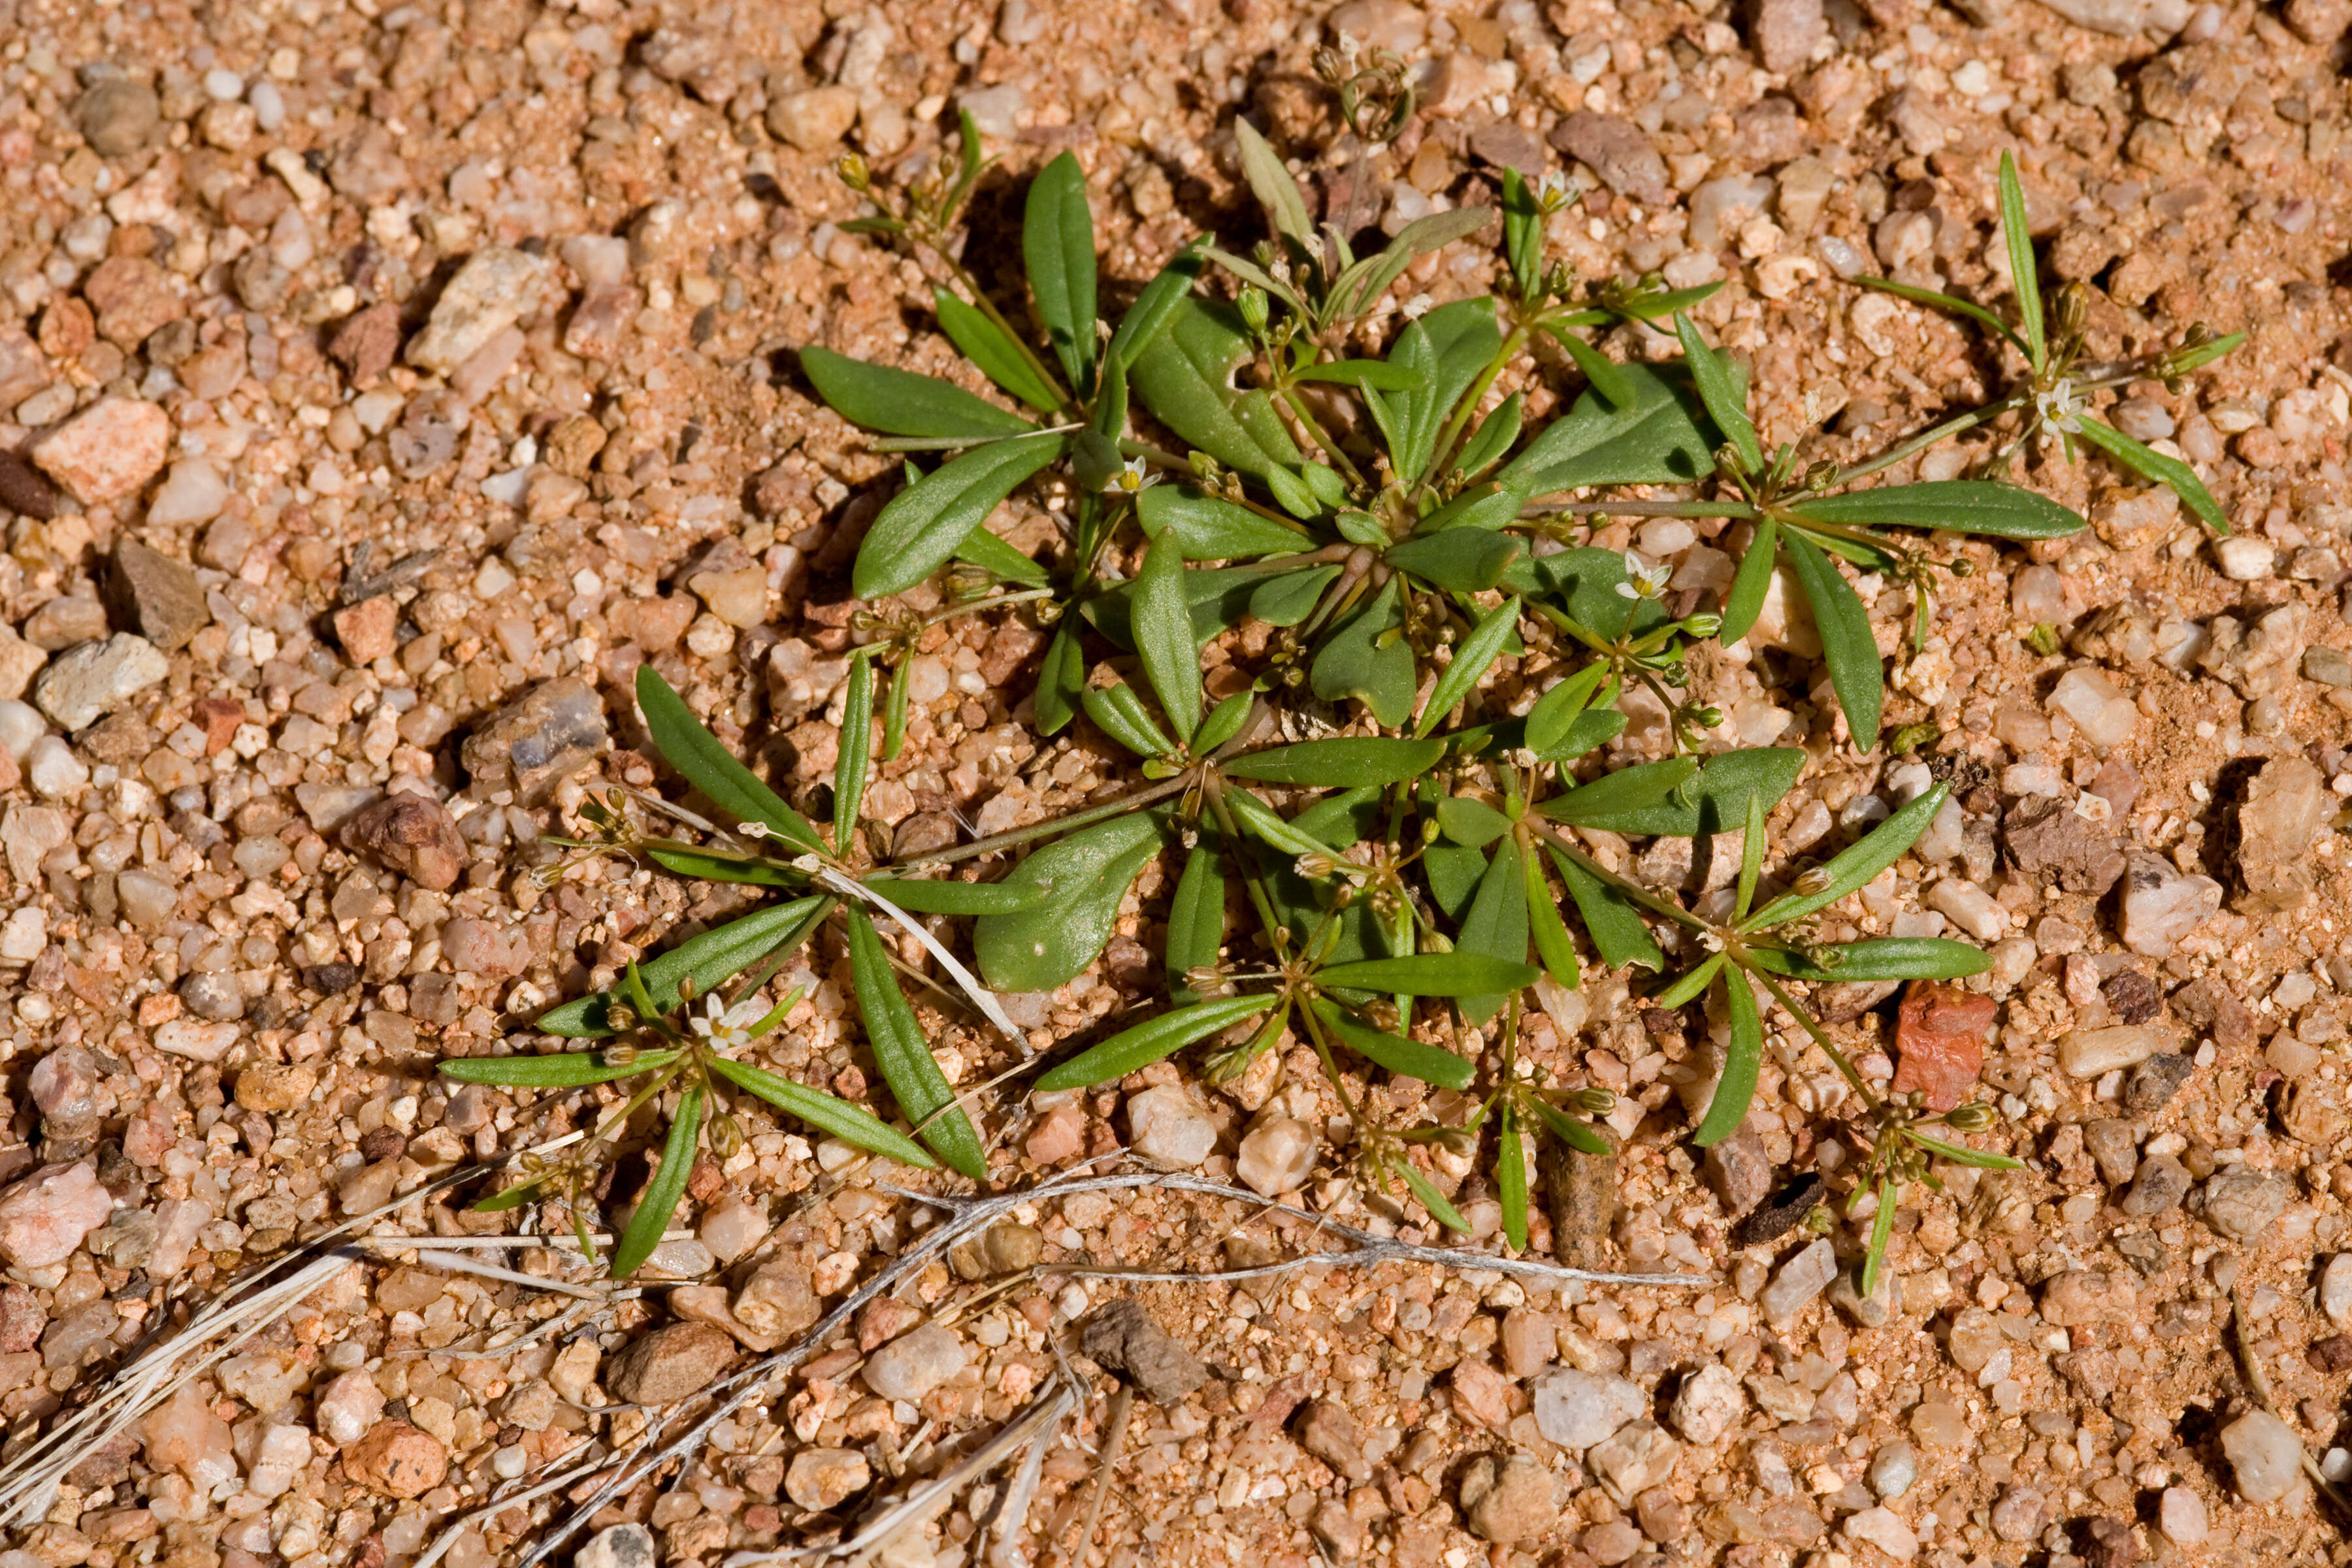 Image of carpetweed